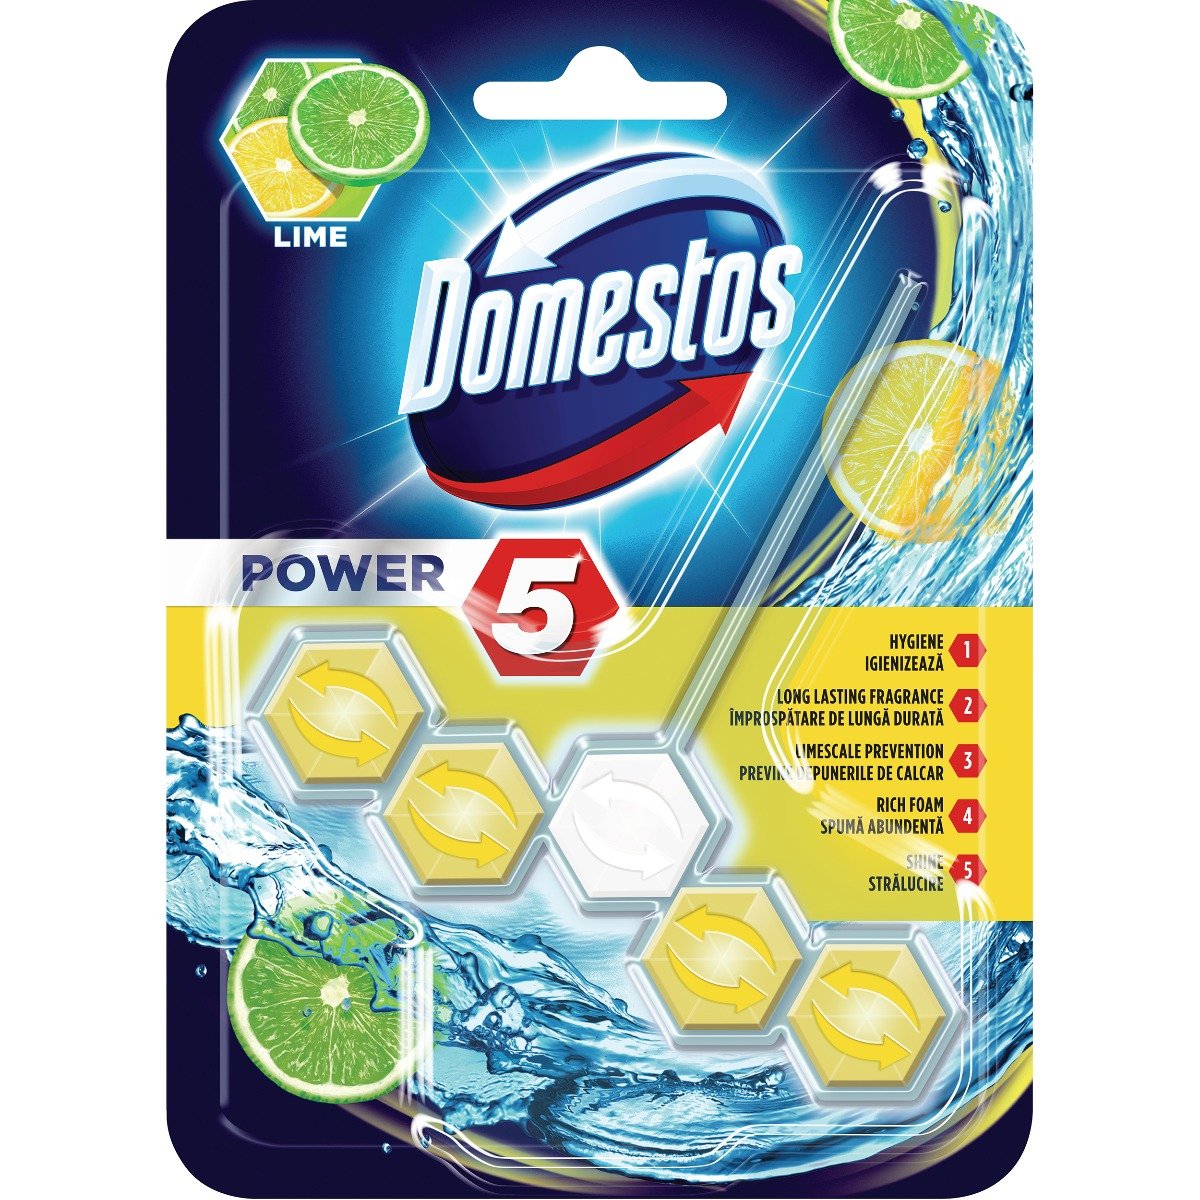 Odorizant de toaleta Domestos Power 5 Lime, 55 g imagine